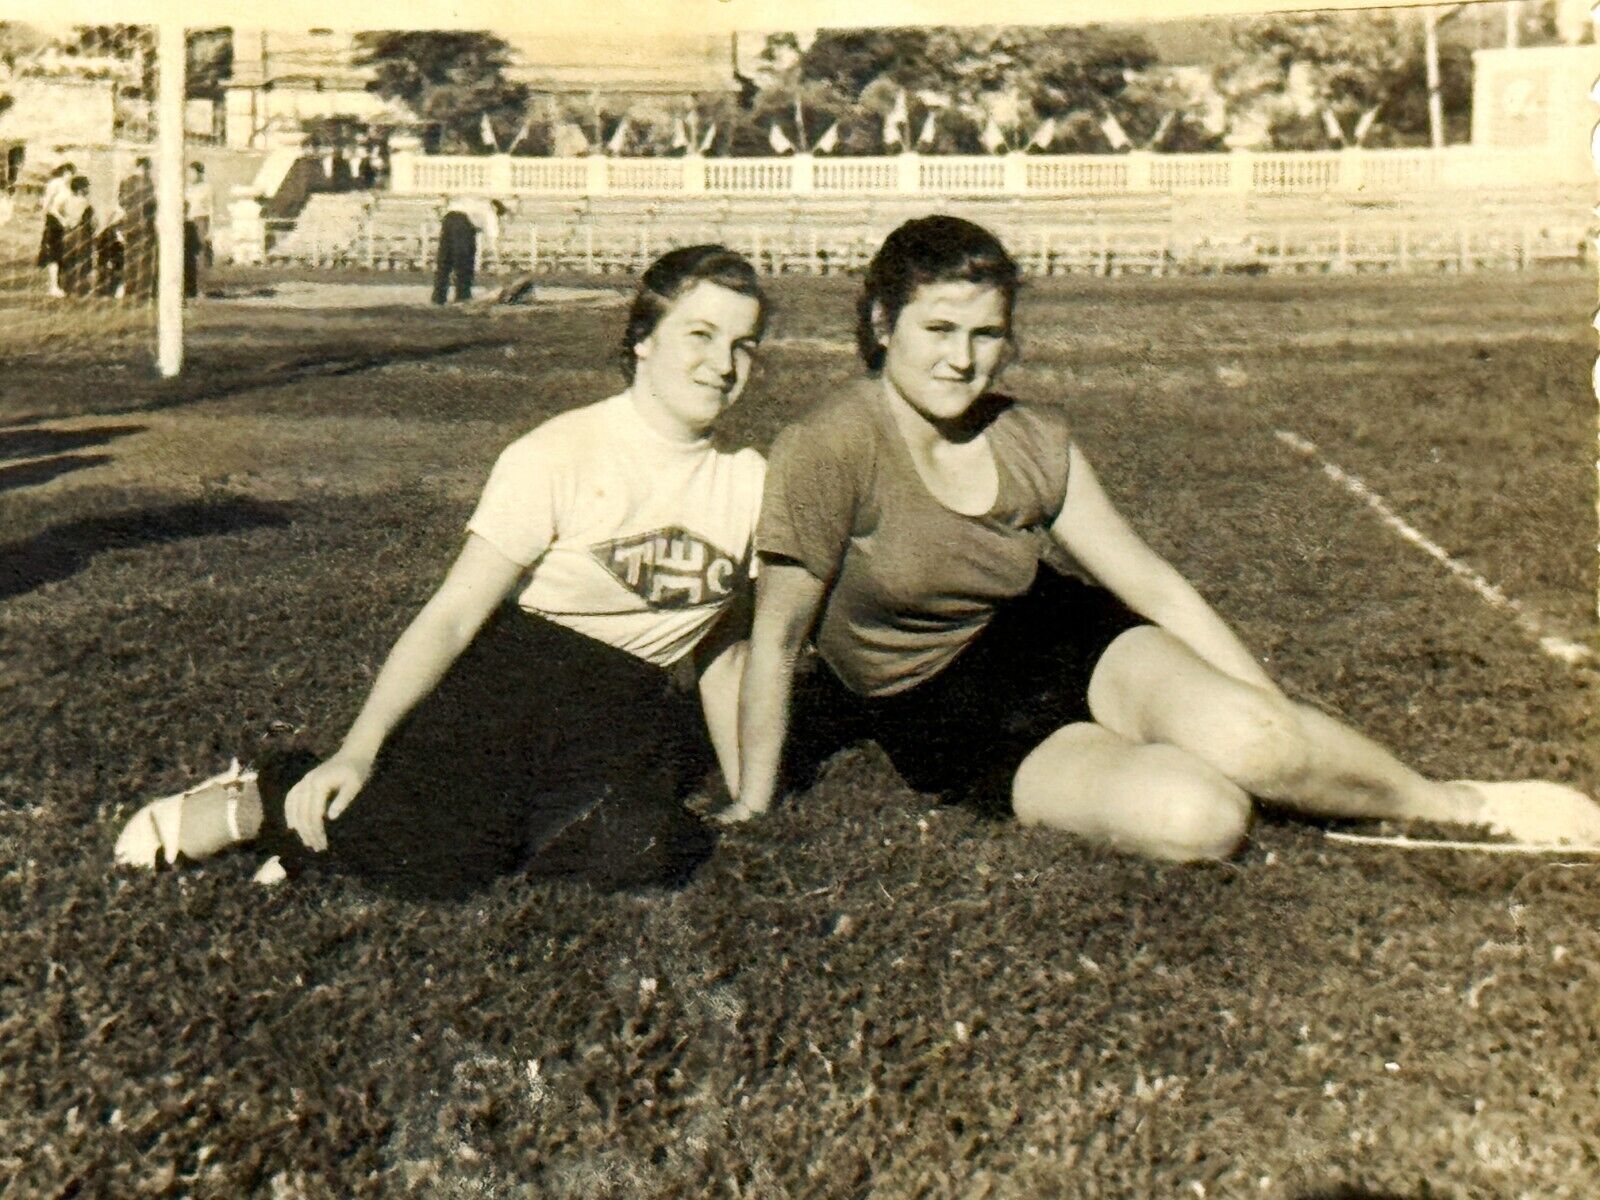 1956 Vintage Photo Beauty Girls Young Pretty Sports Students Portrait Snapshot